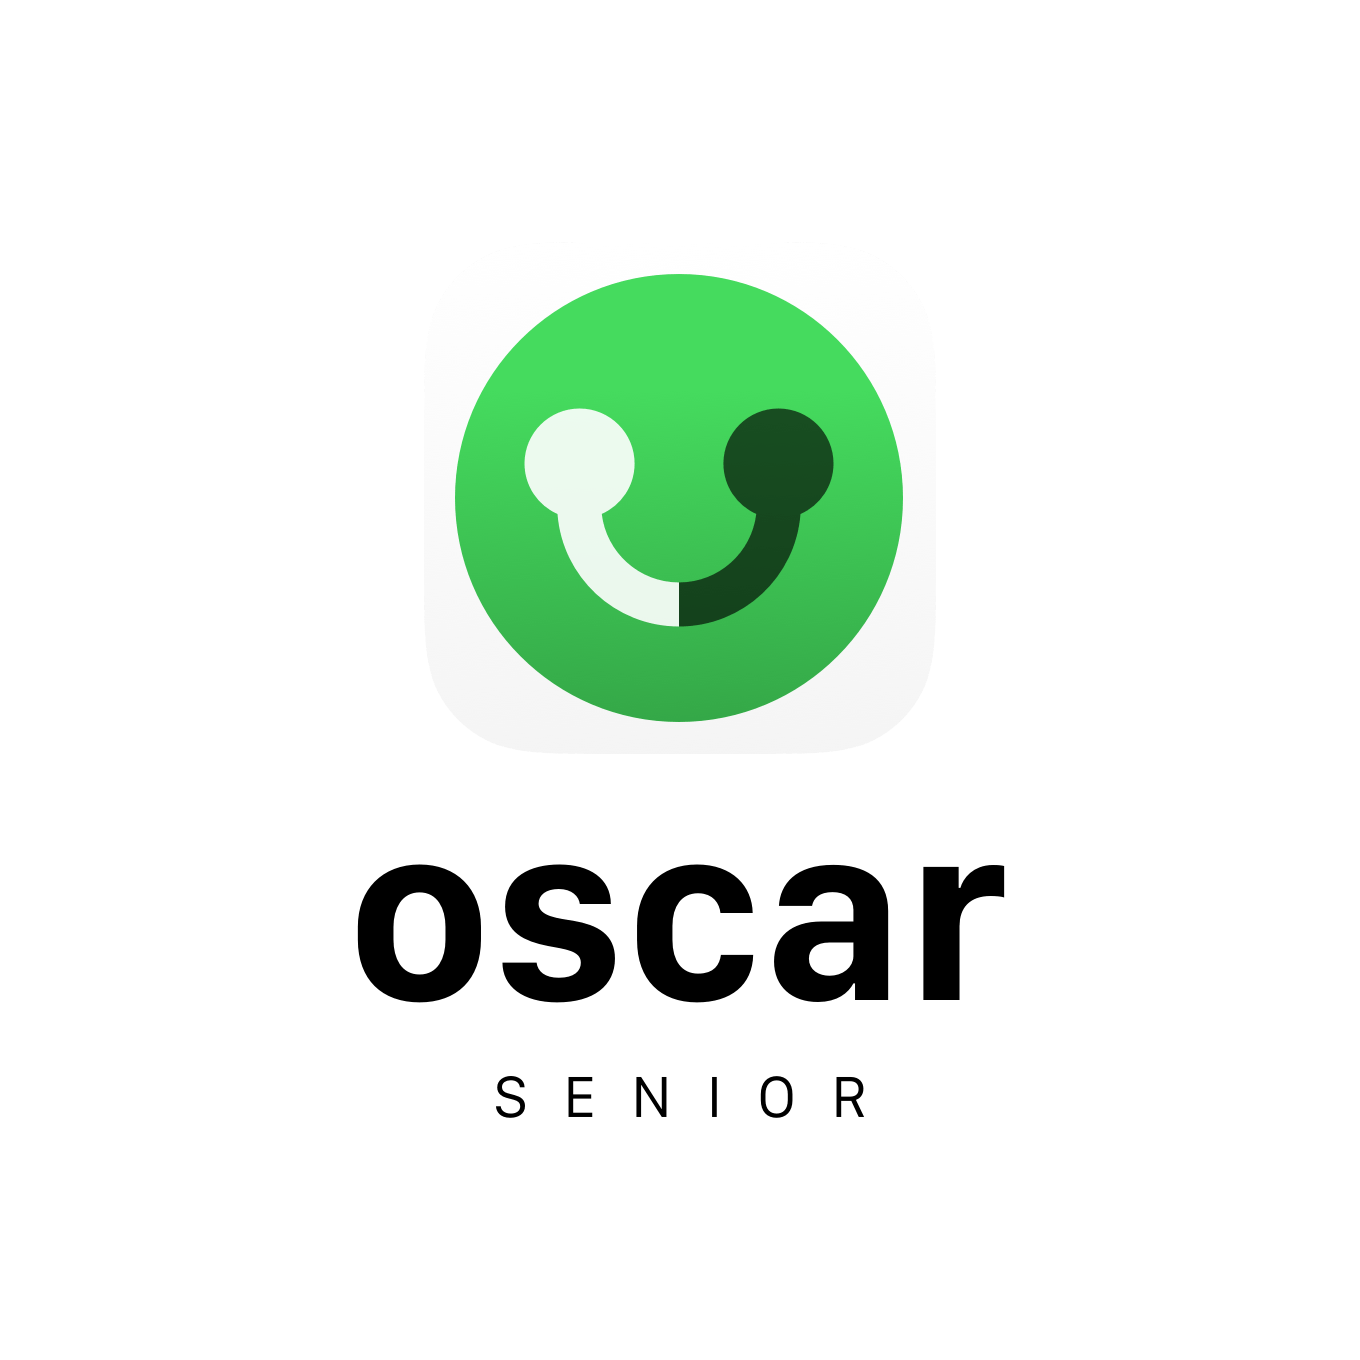 Senior Logo - Oscar Senior | Media Kit